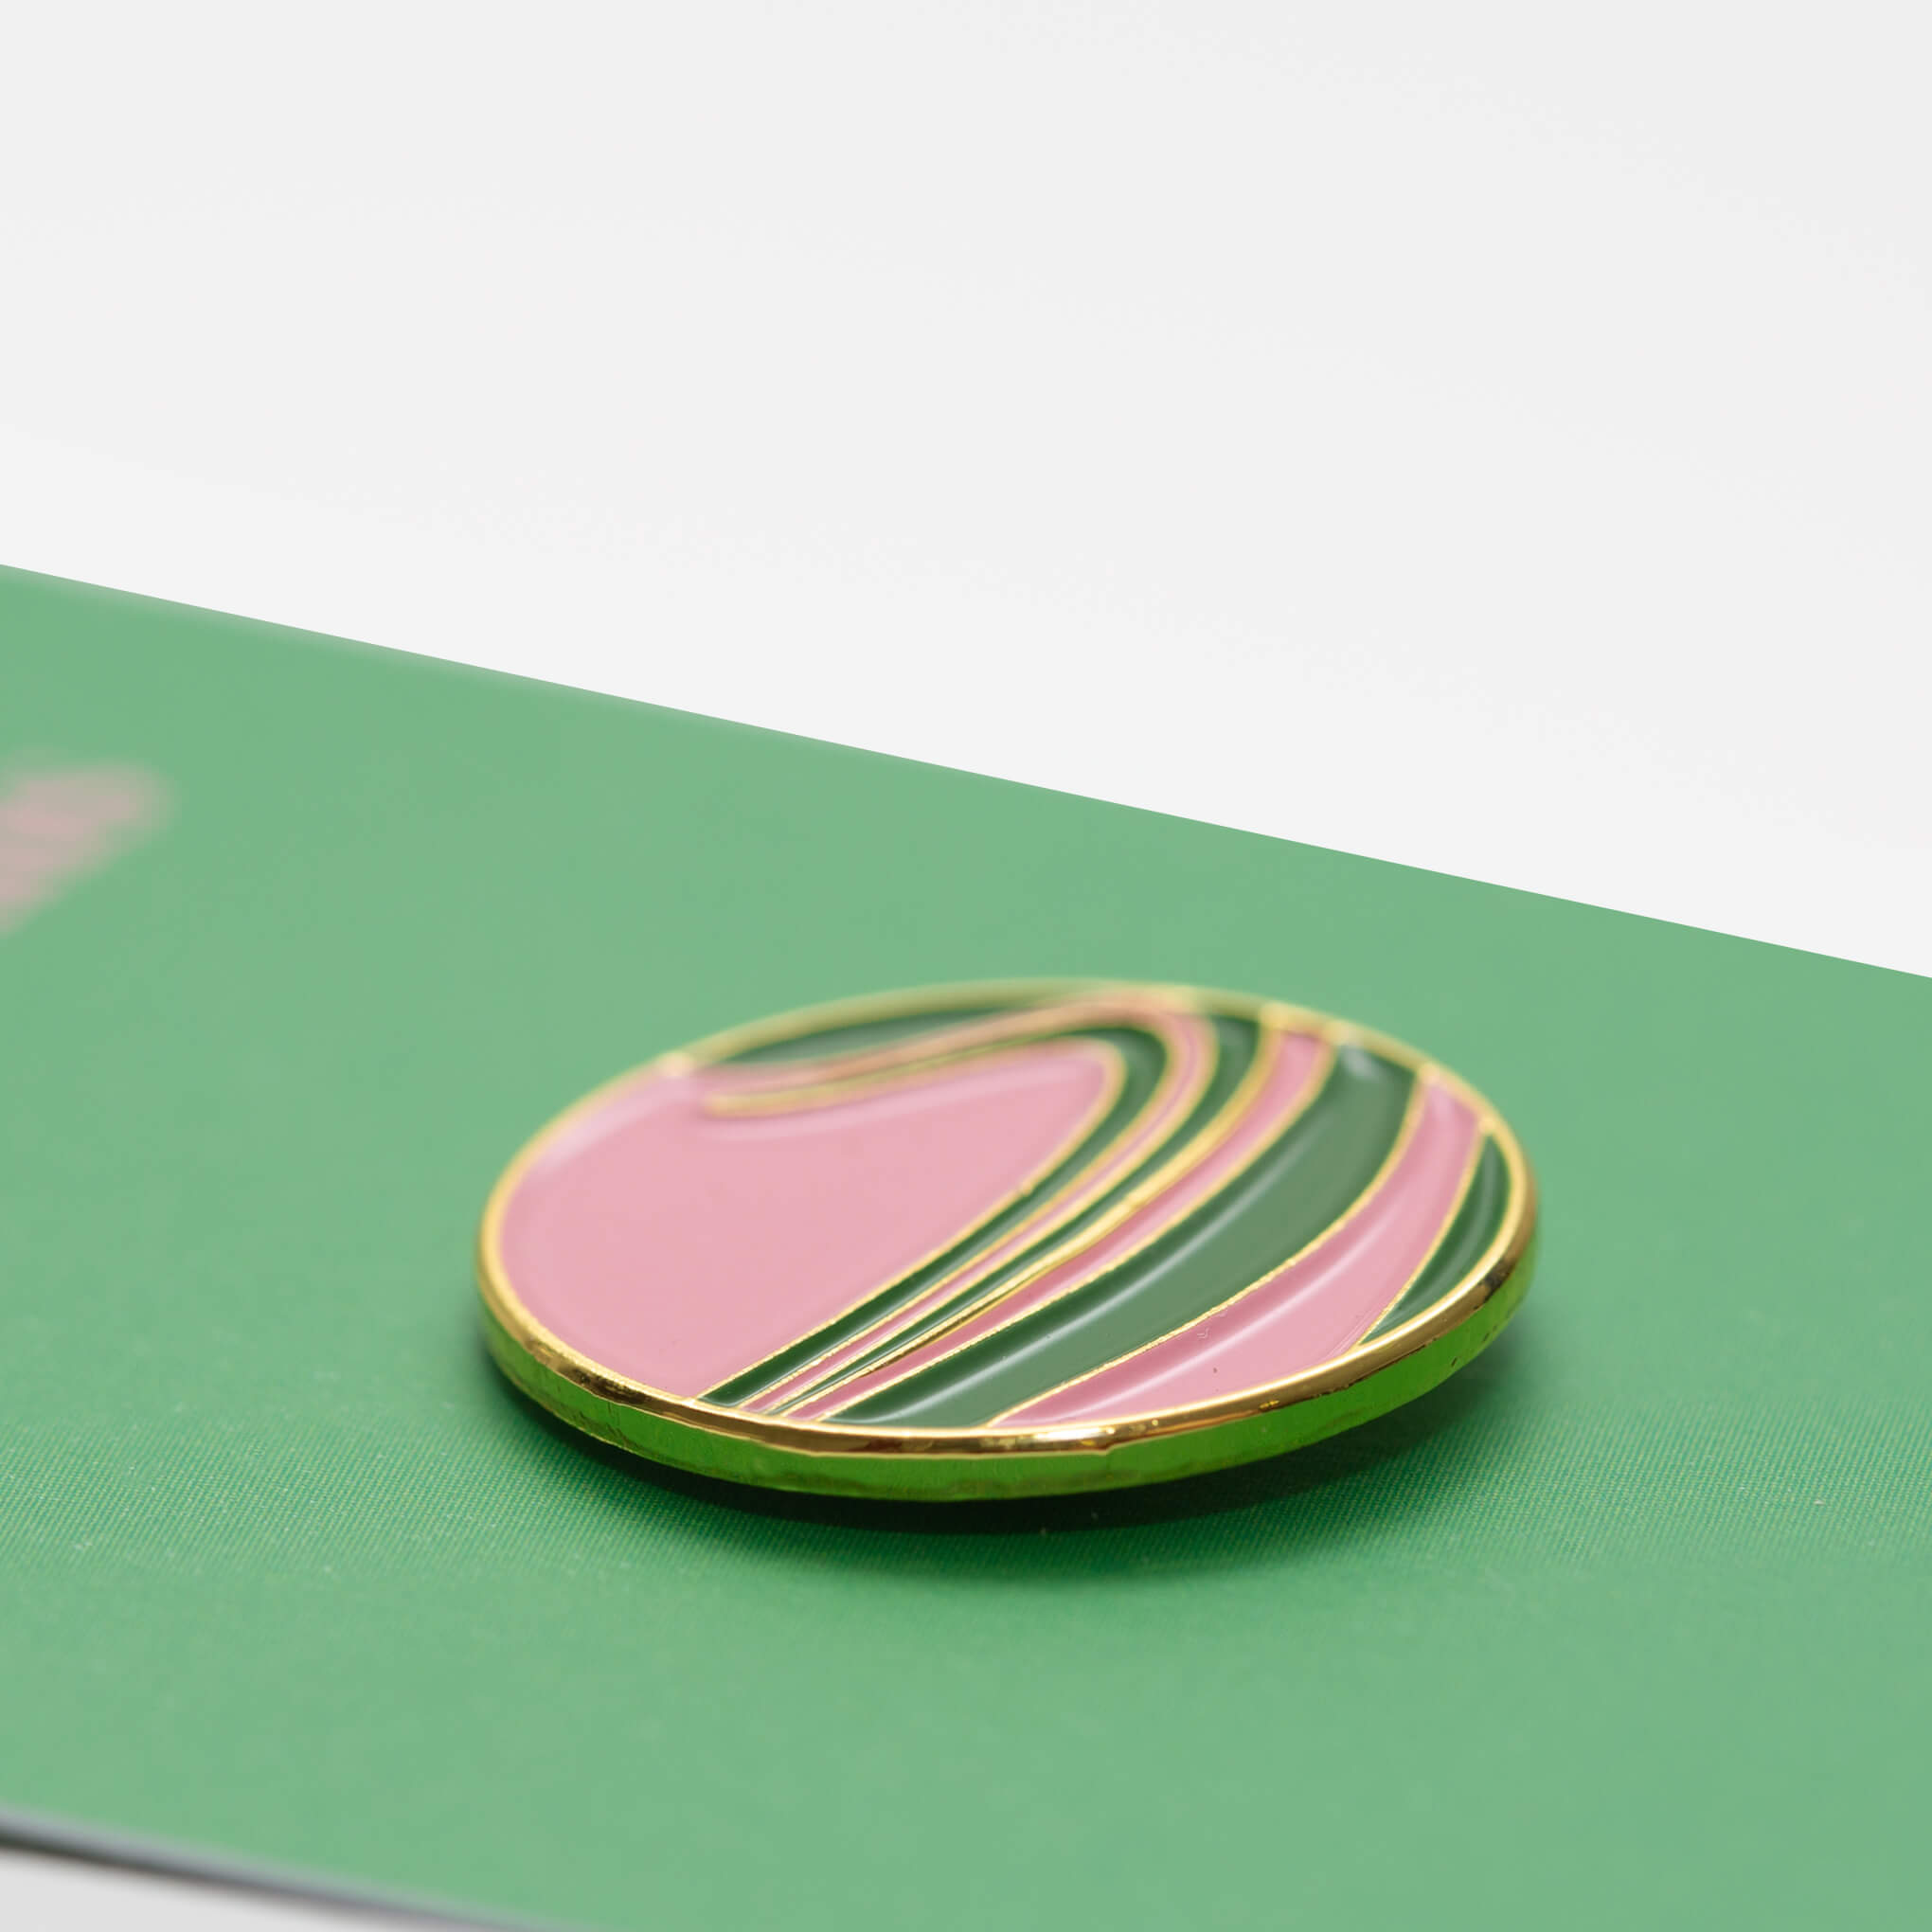 ICON: Pink & Green Swirl Pin Badge